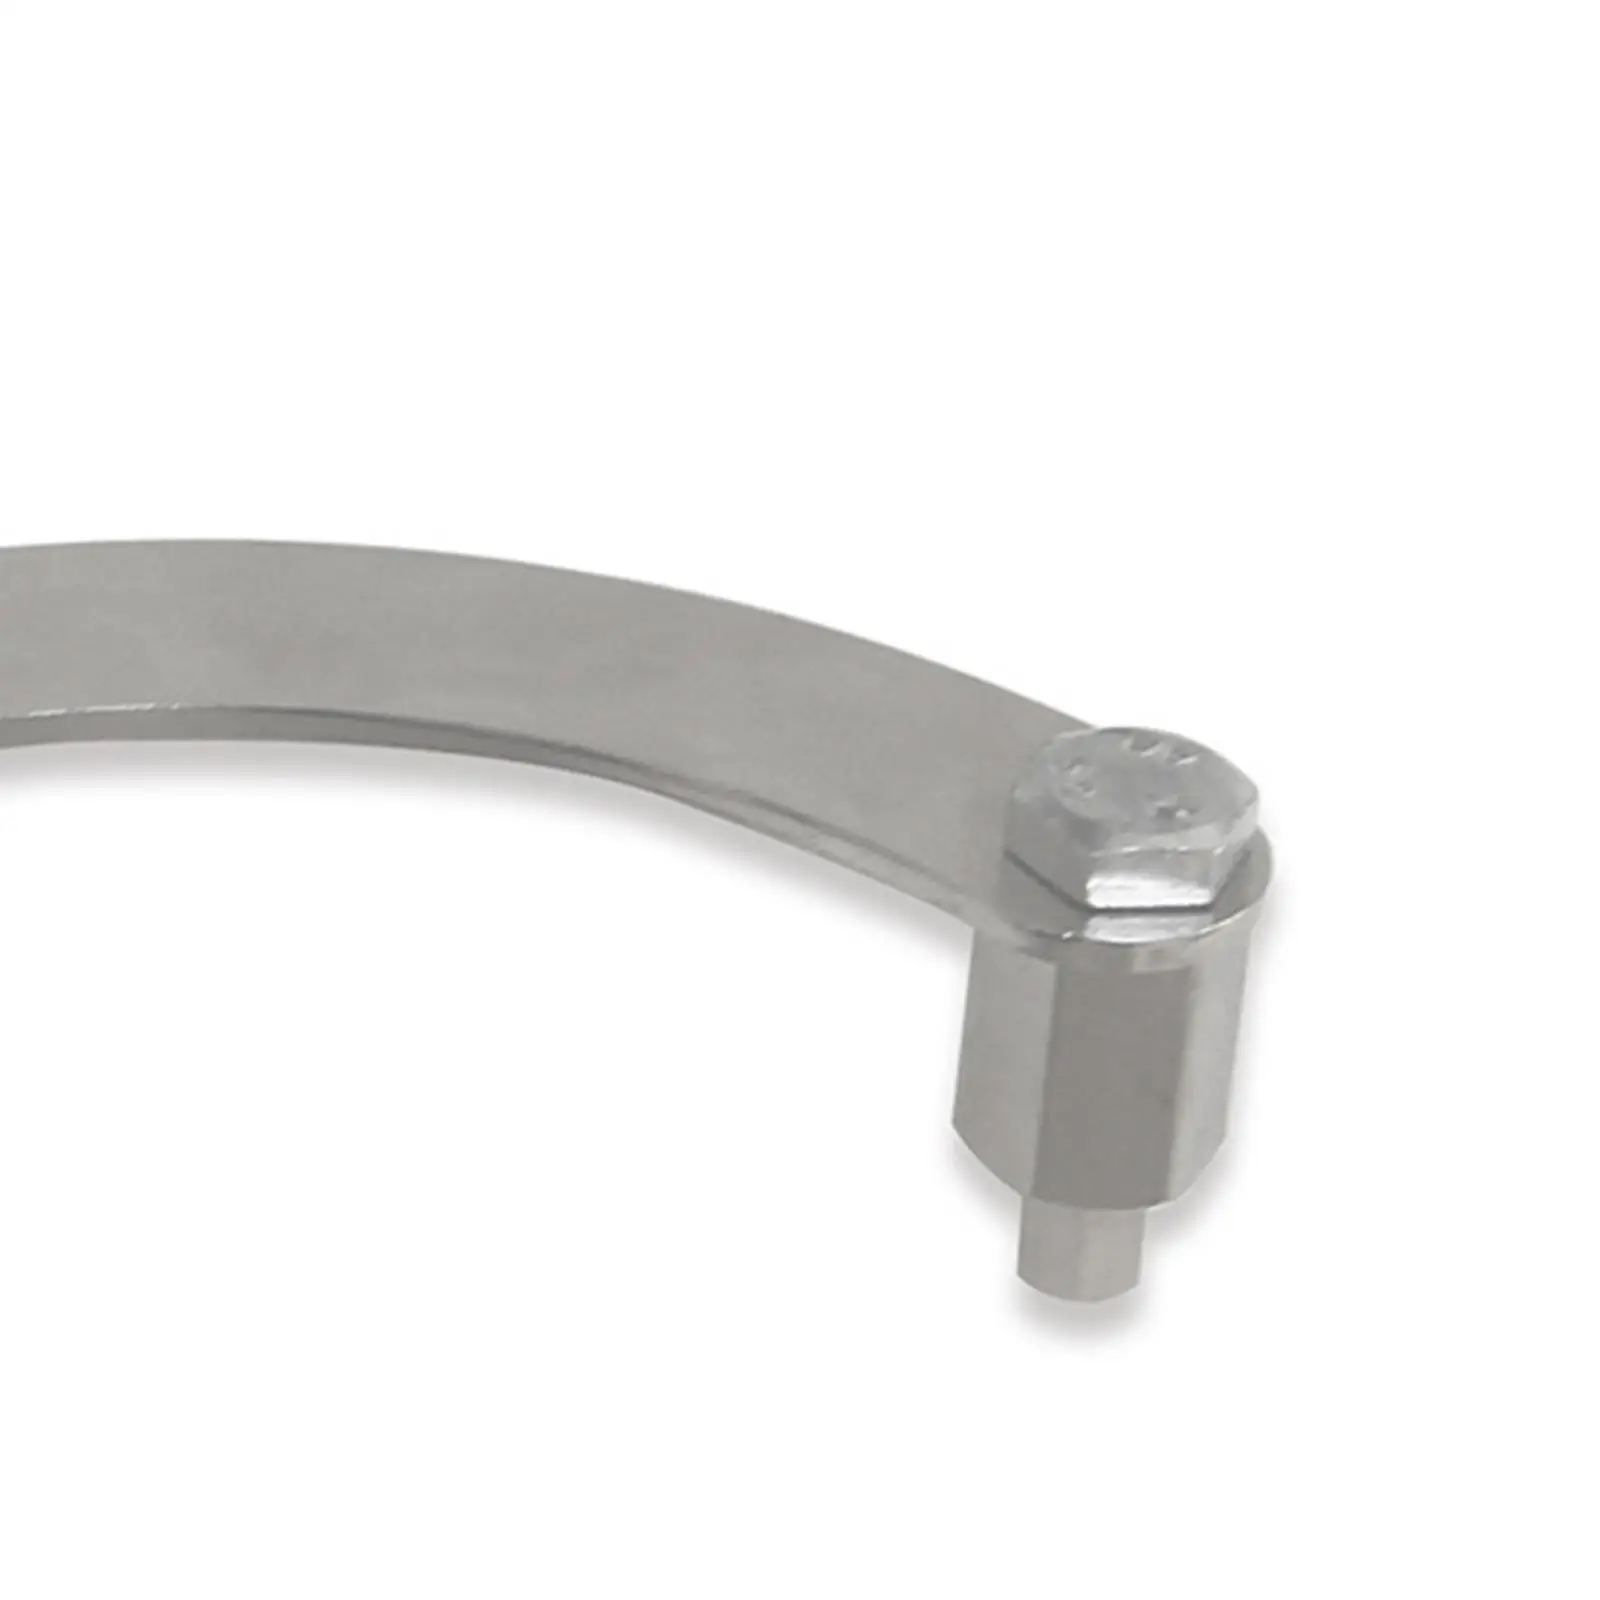 cam Gear Lock set Accessory for Subaru WRX Sti Fxt Lgt Durable